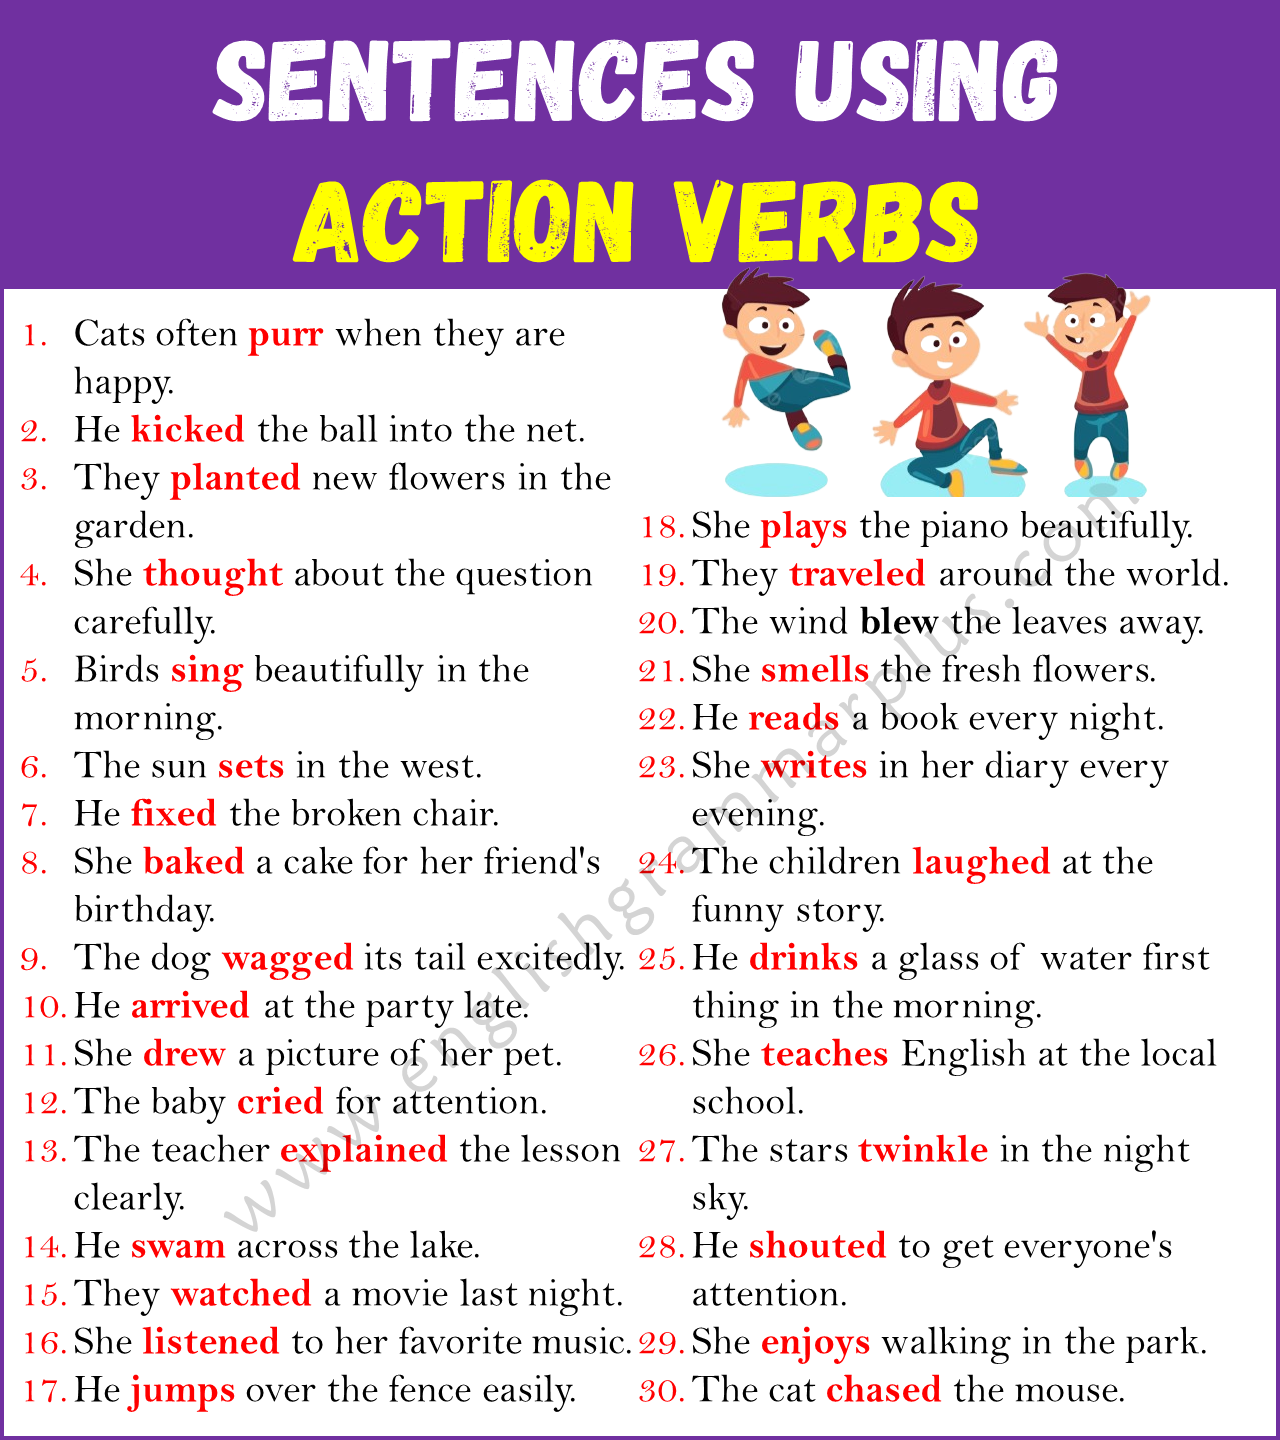 Example Sentences Using Action Verbs